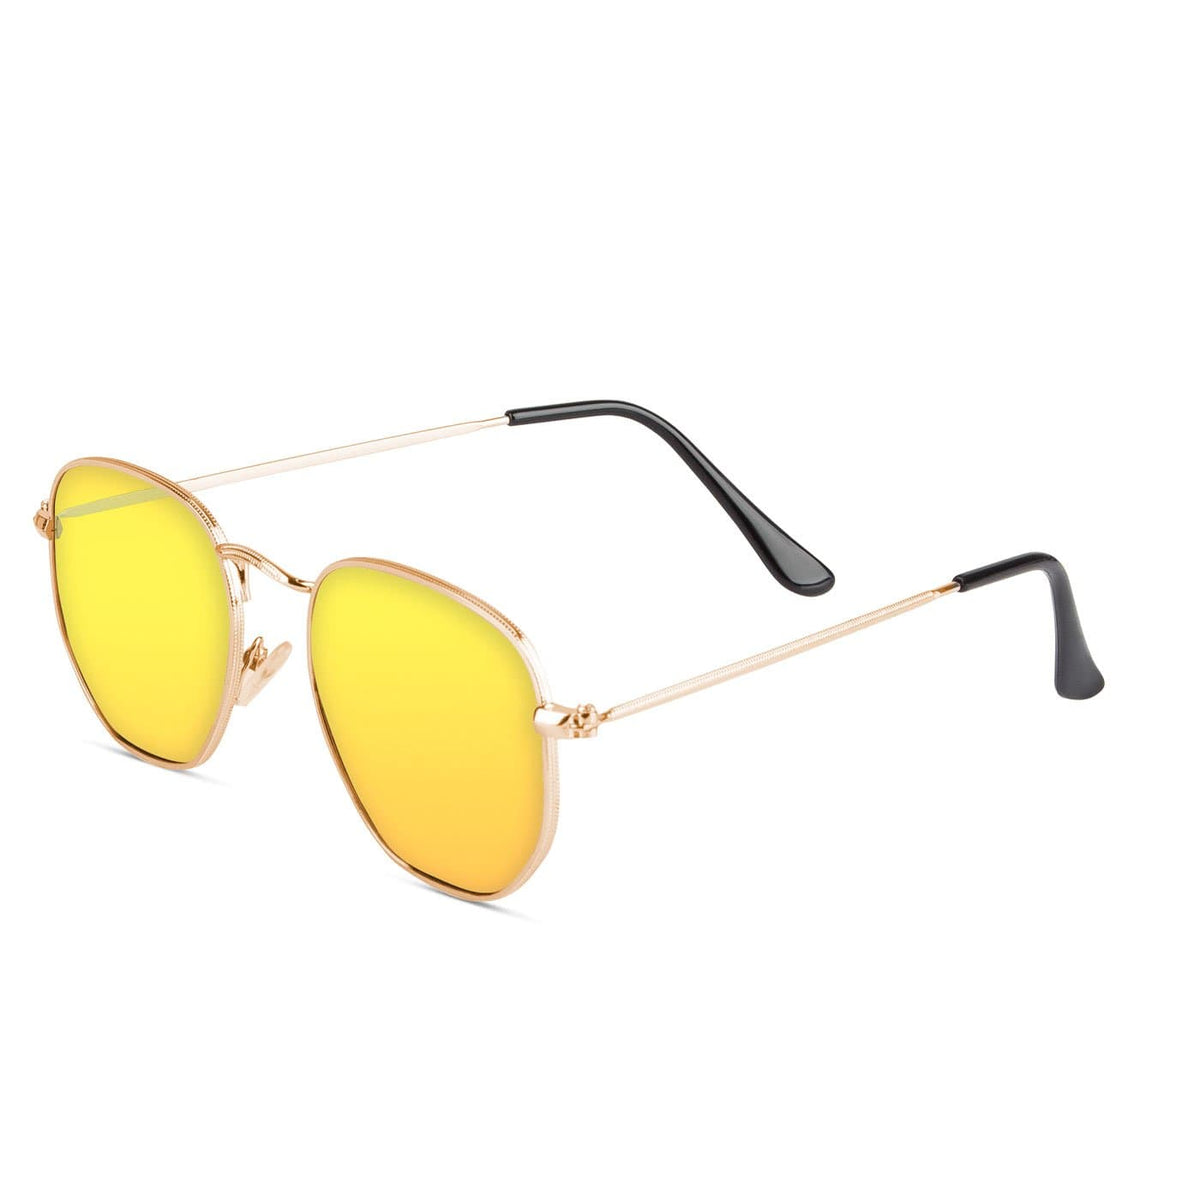 Samui Gold / Yellow Sunglasses